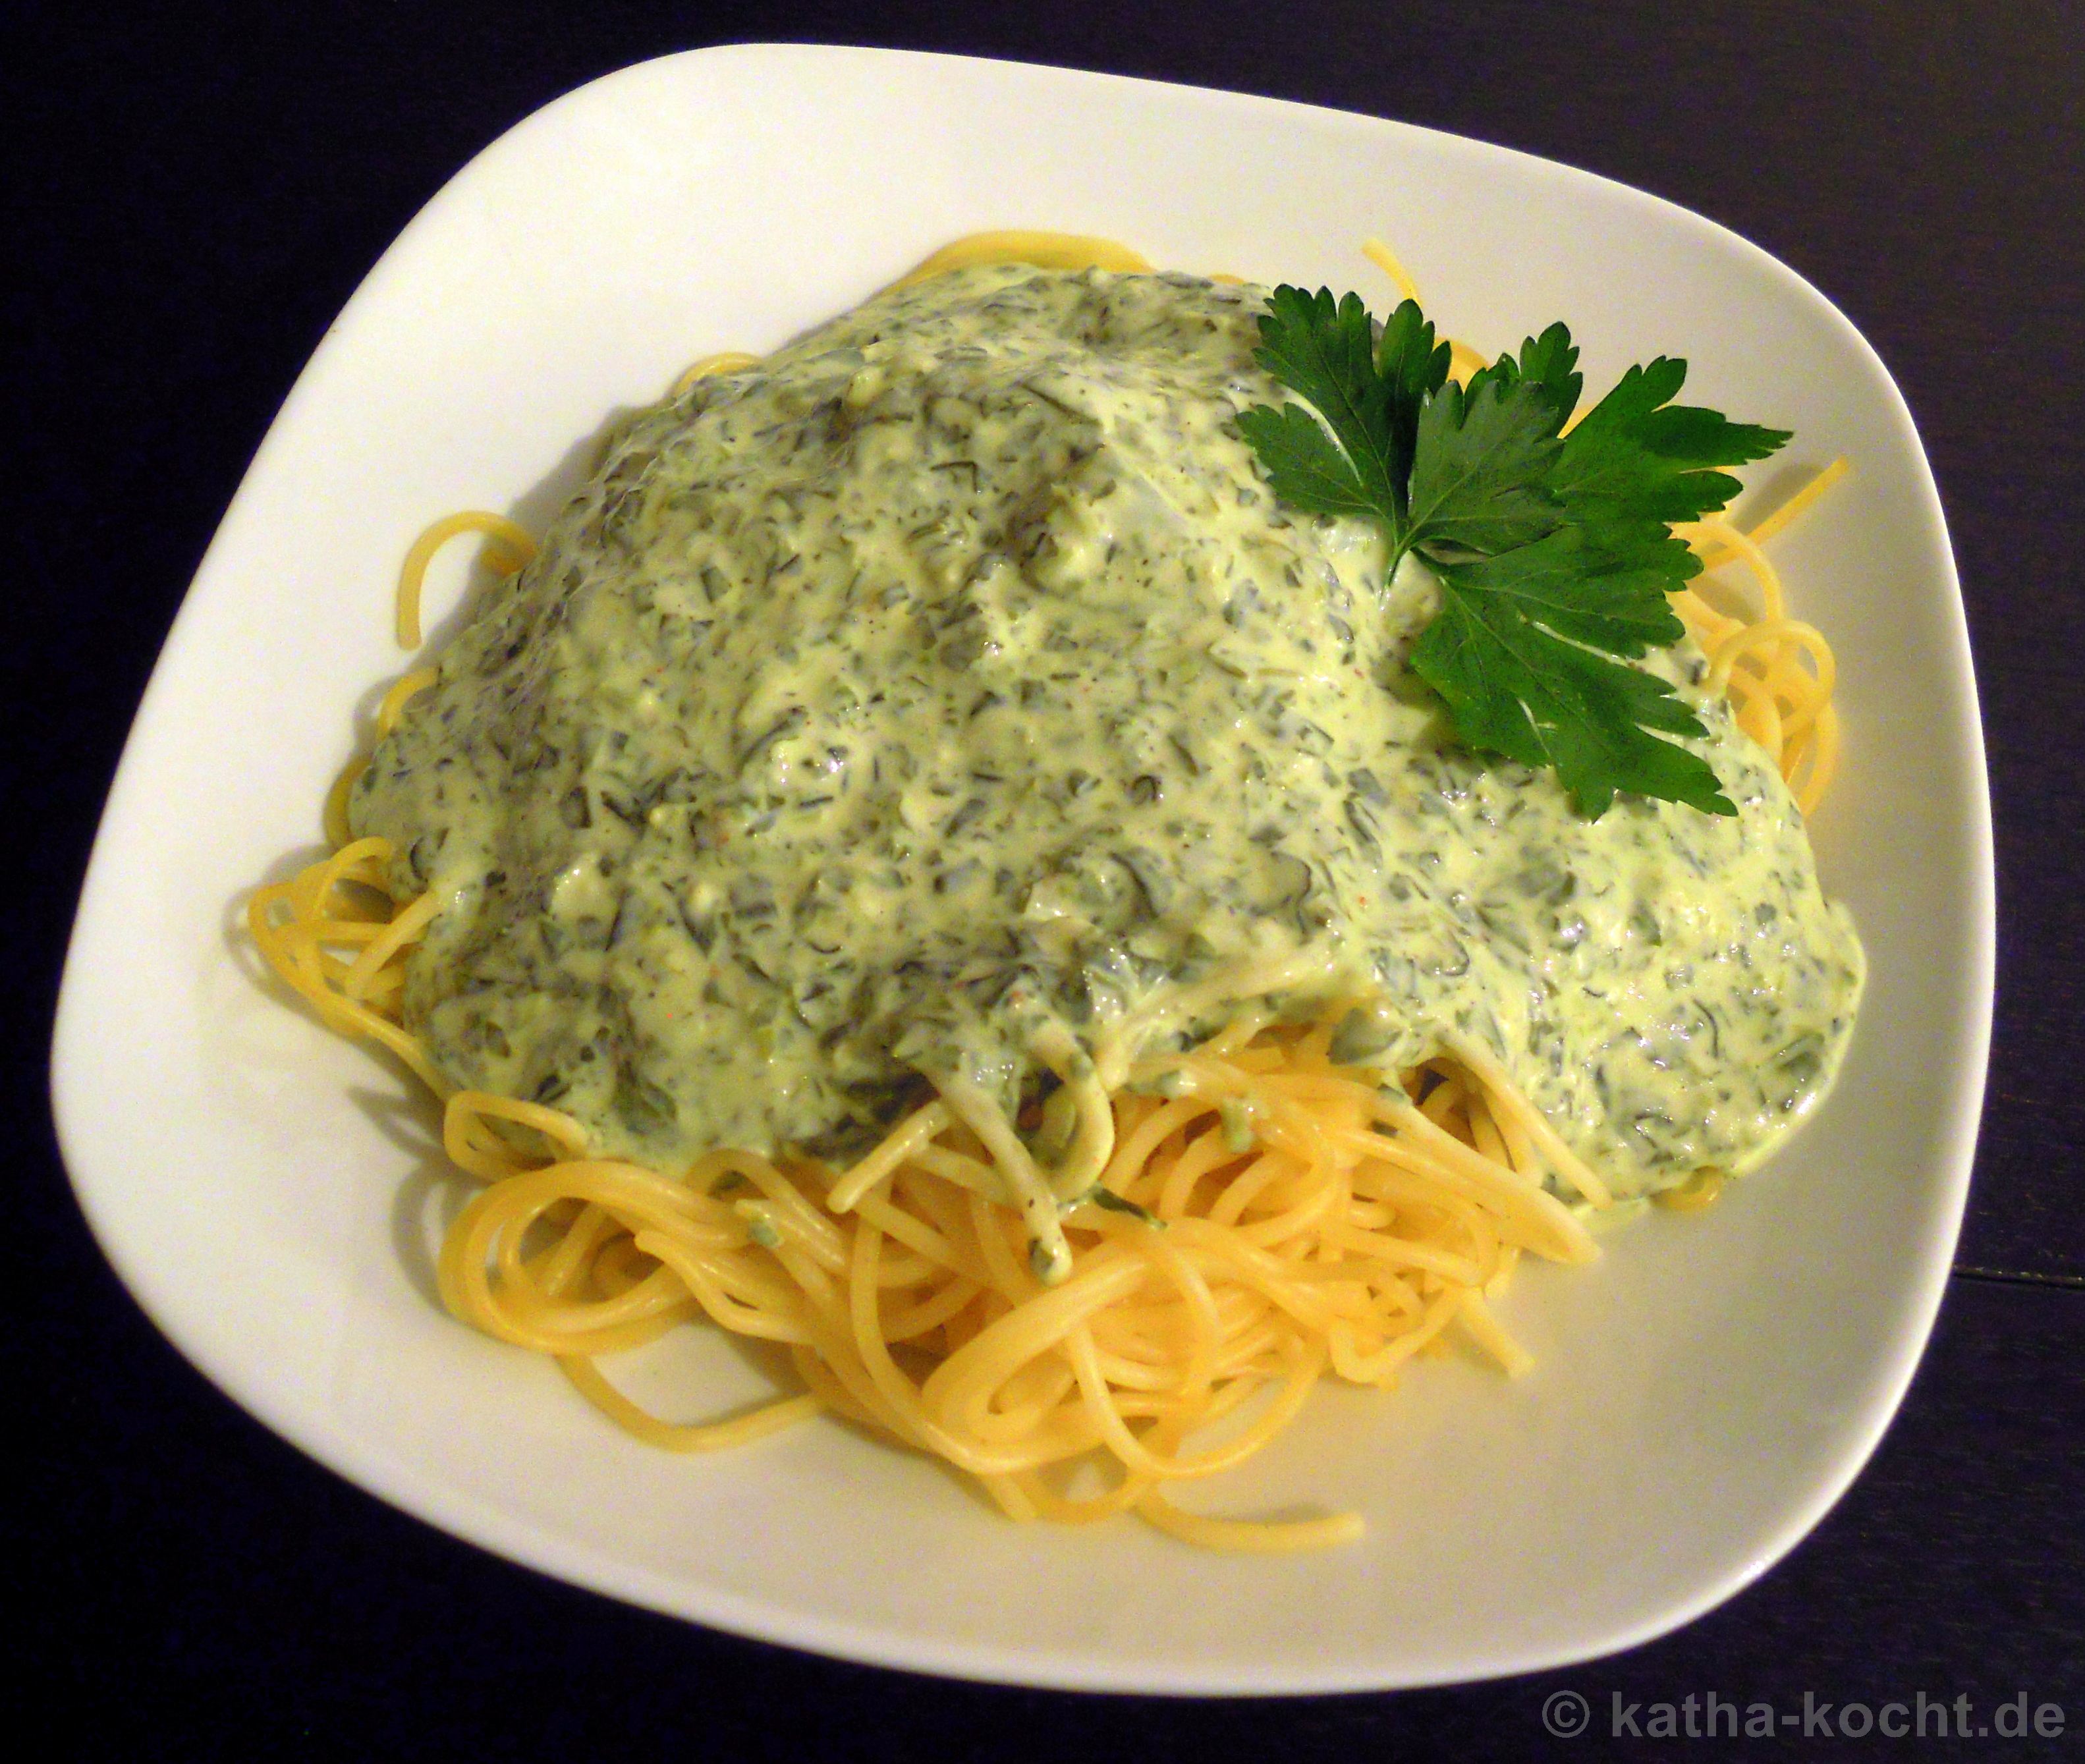 Spaghetti mit Spinat-Gorgonzola Sauce - Katha-kocht!